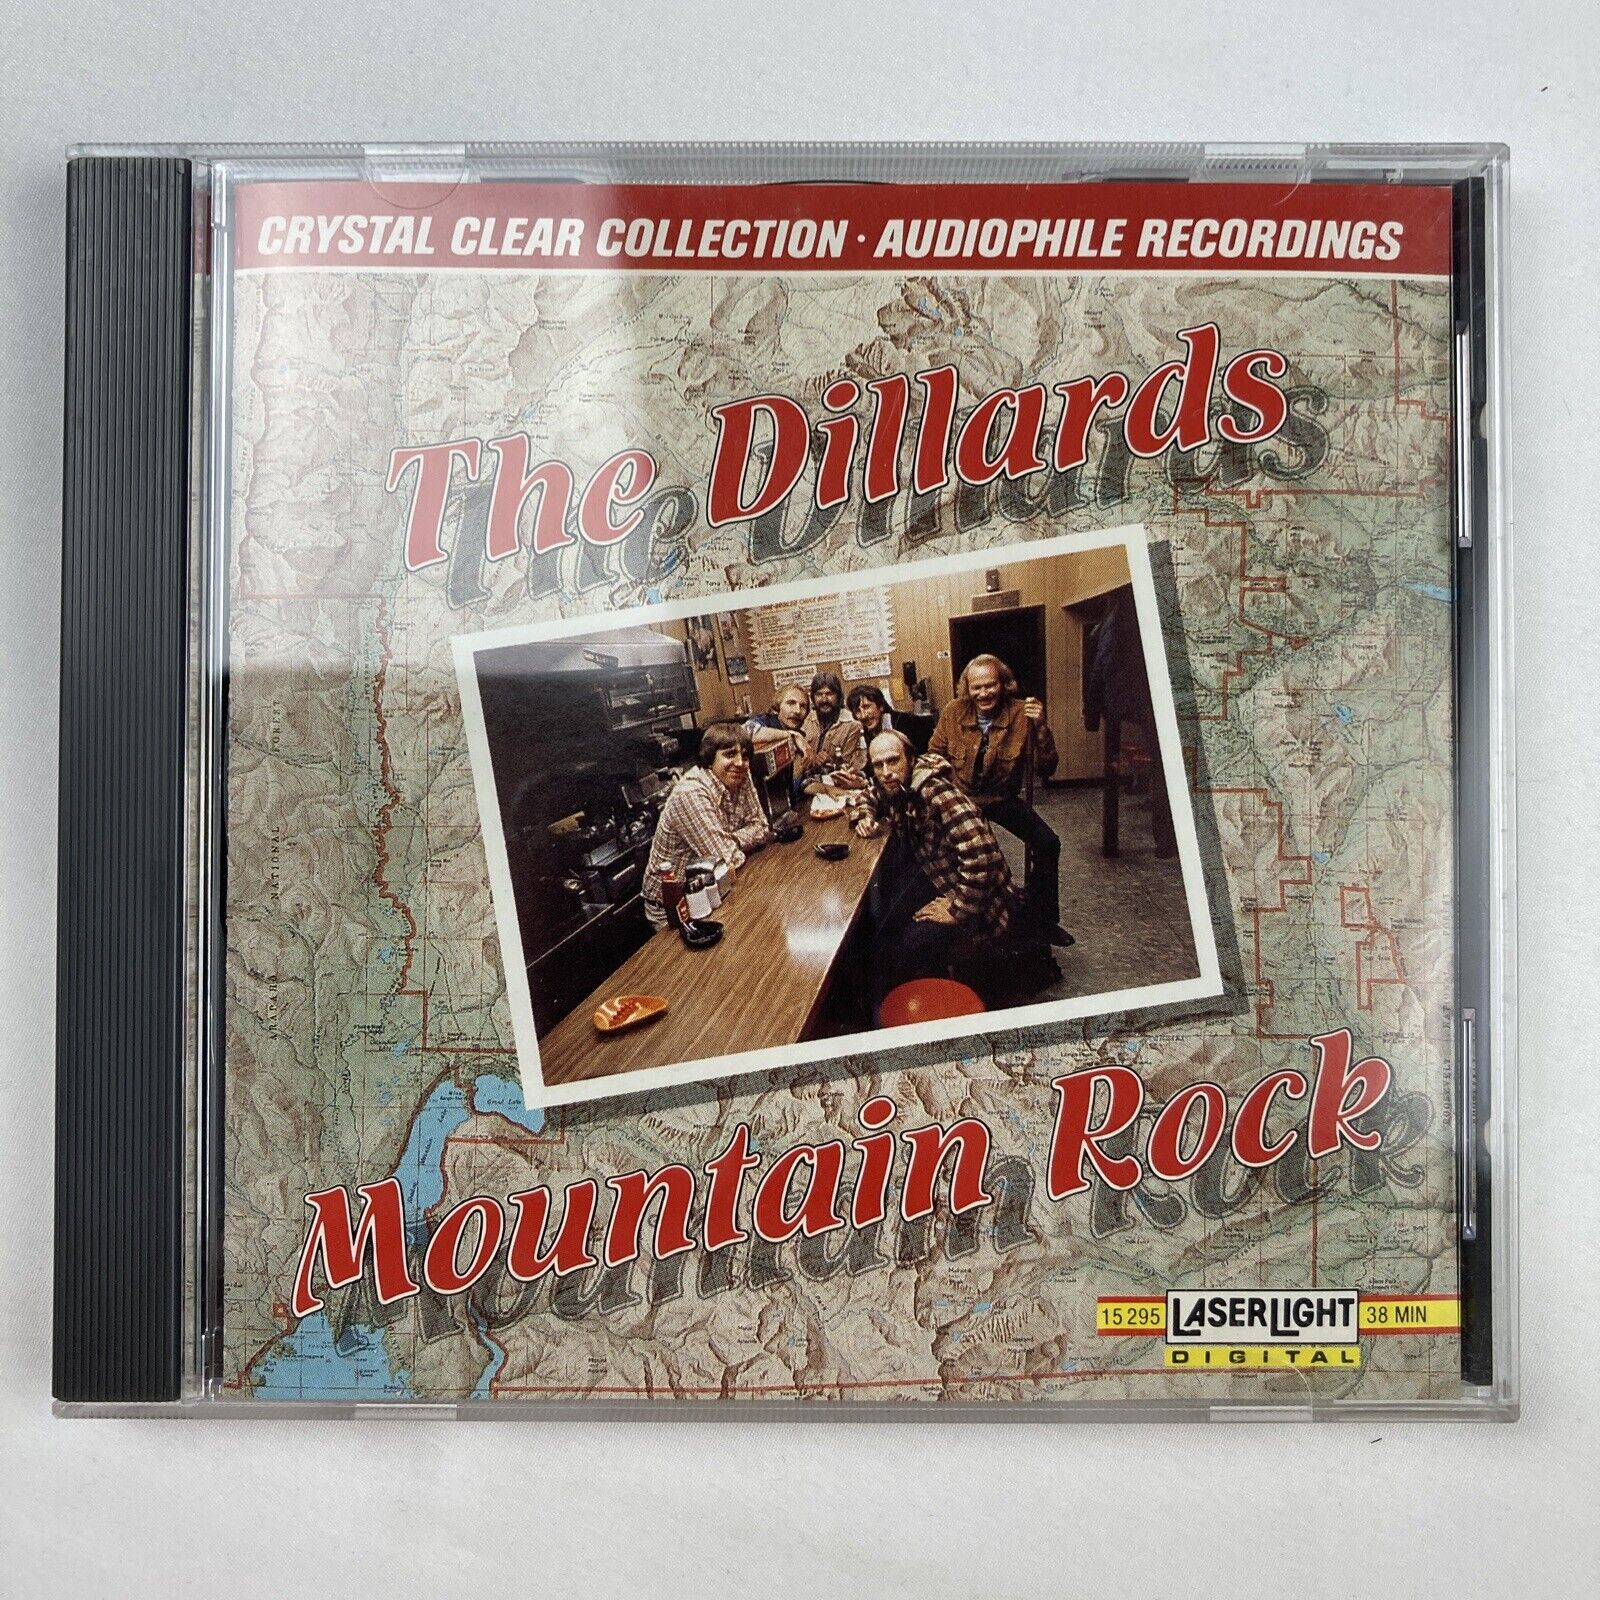 Mountain Rock by The Dillards (CD, Oct-1991, Laserlight)